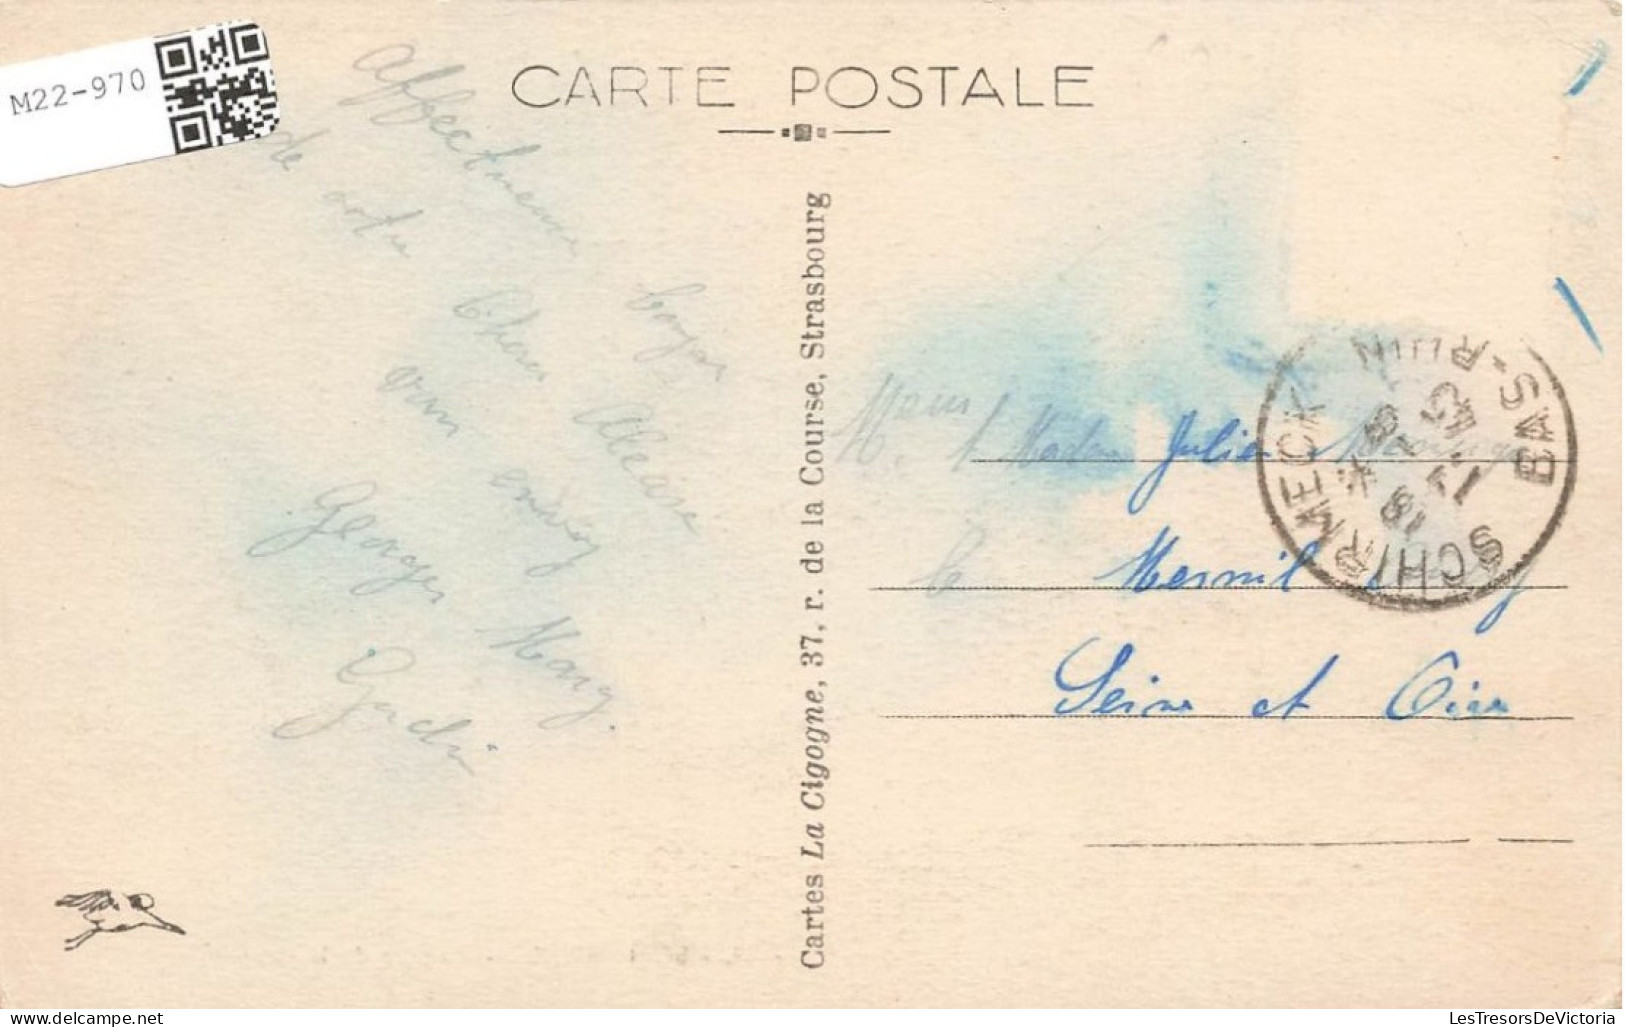 FRANCE - Schirmeck - Avenue De La Gare - Carte Postale Ancienne - Schirmeck